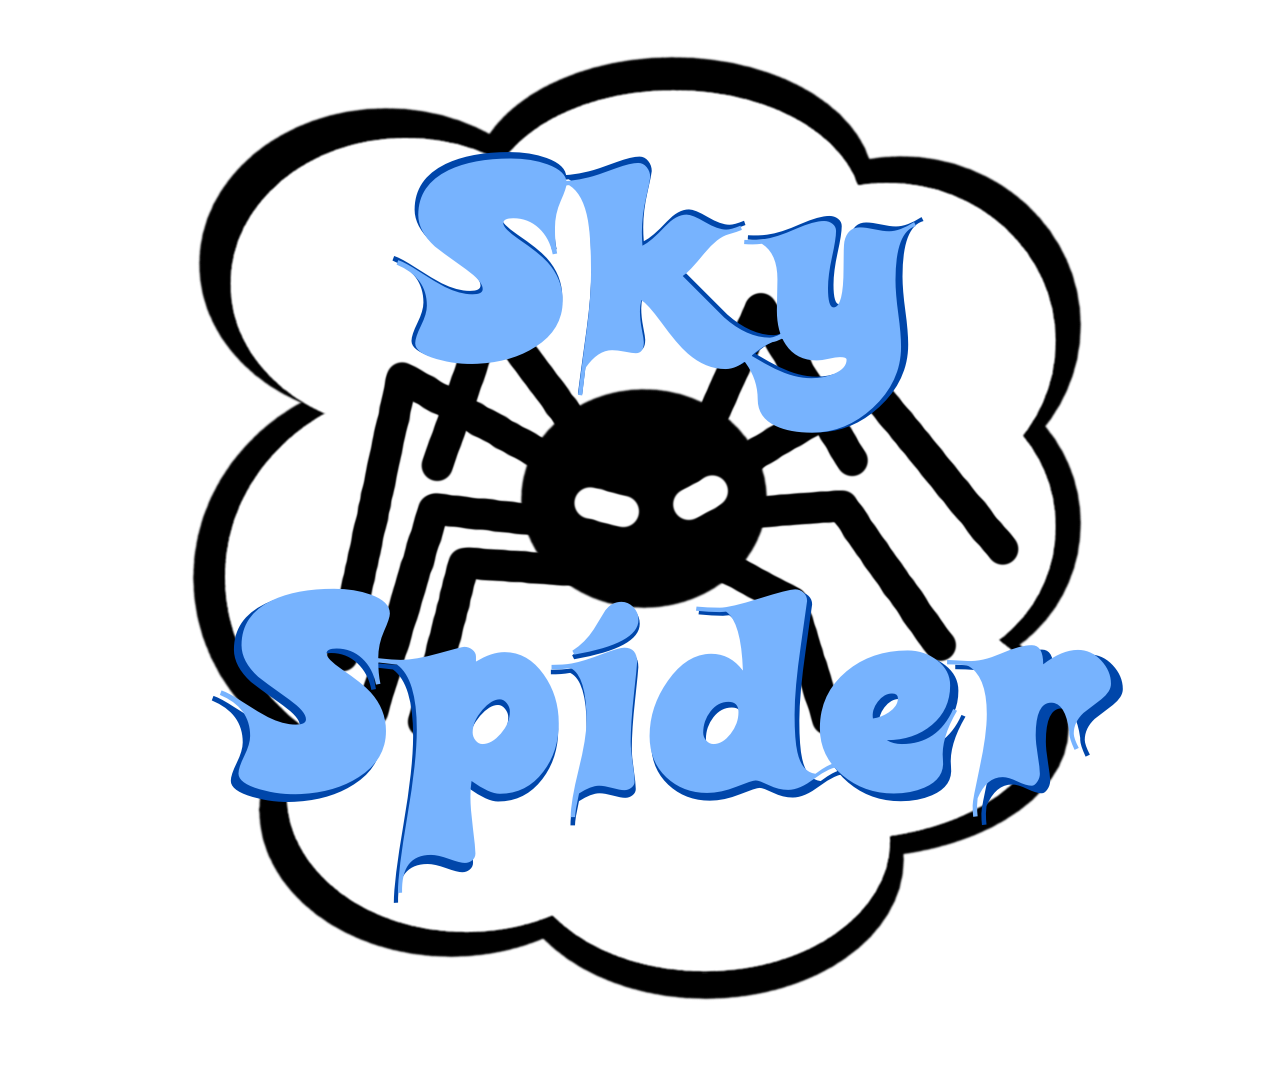 Sky Spider